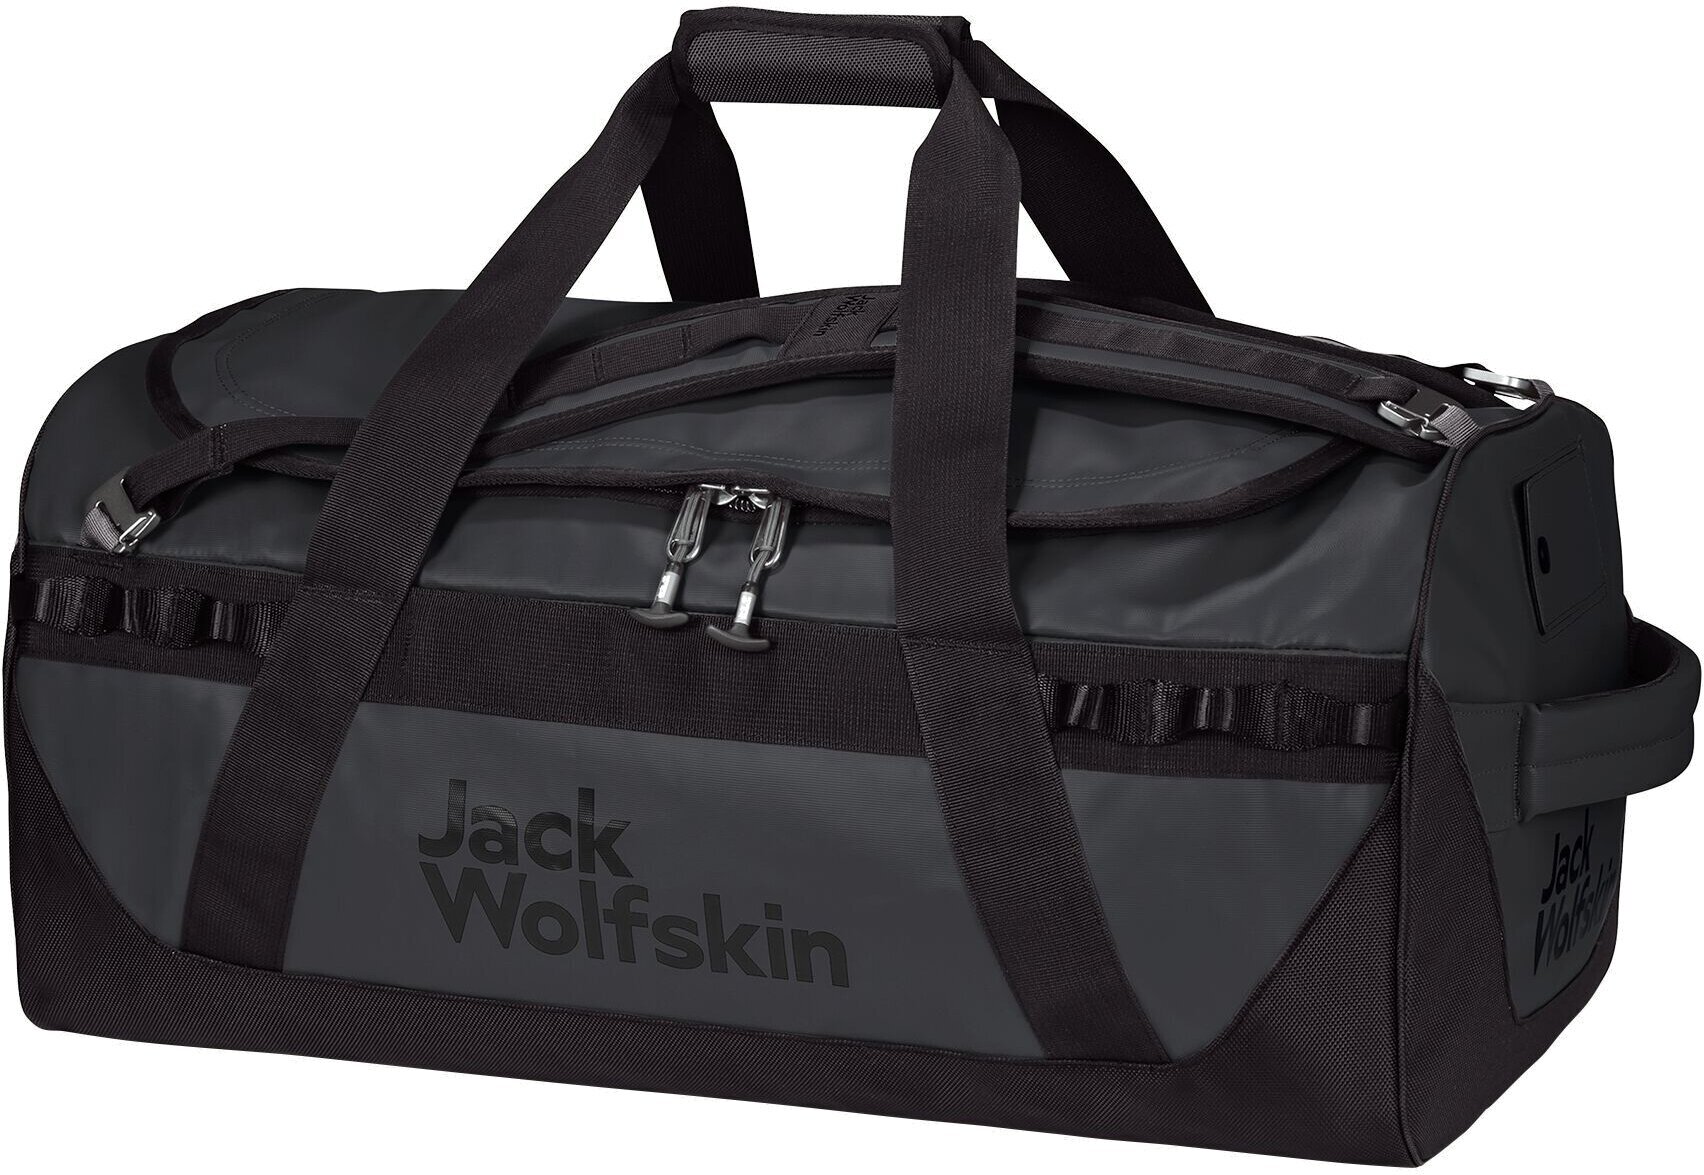 Outdoor plecak Jack Wolfskin Expedition Trunk 65 Black Tylko jeden rozmiar Outdoor plecak